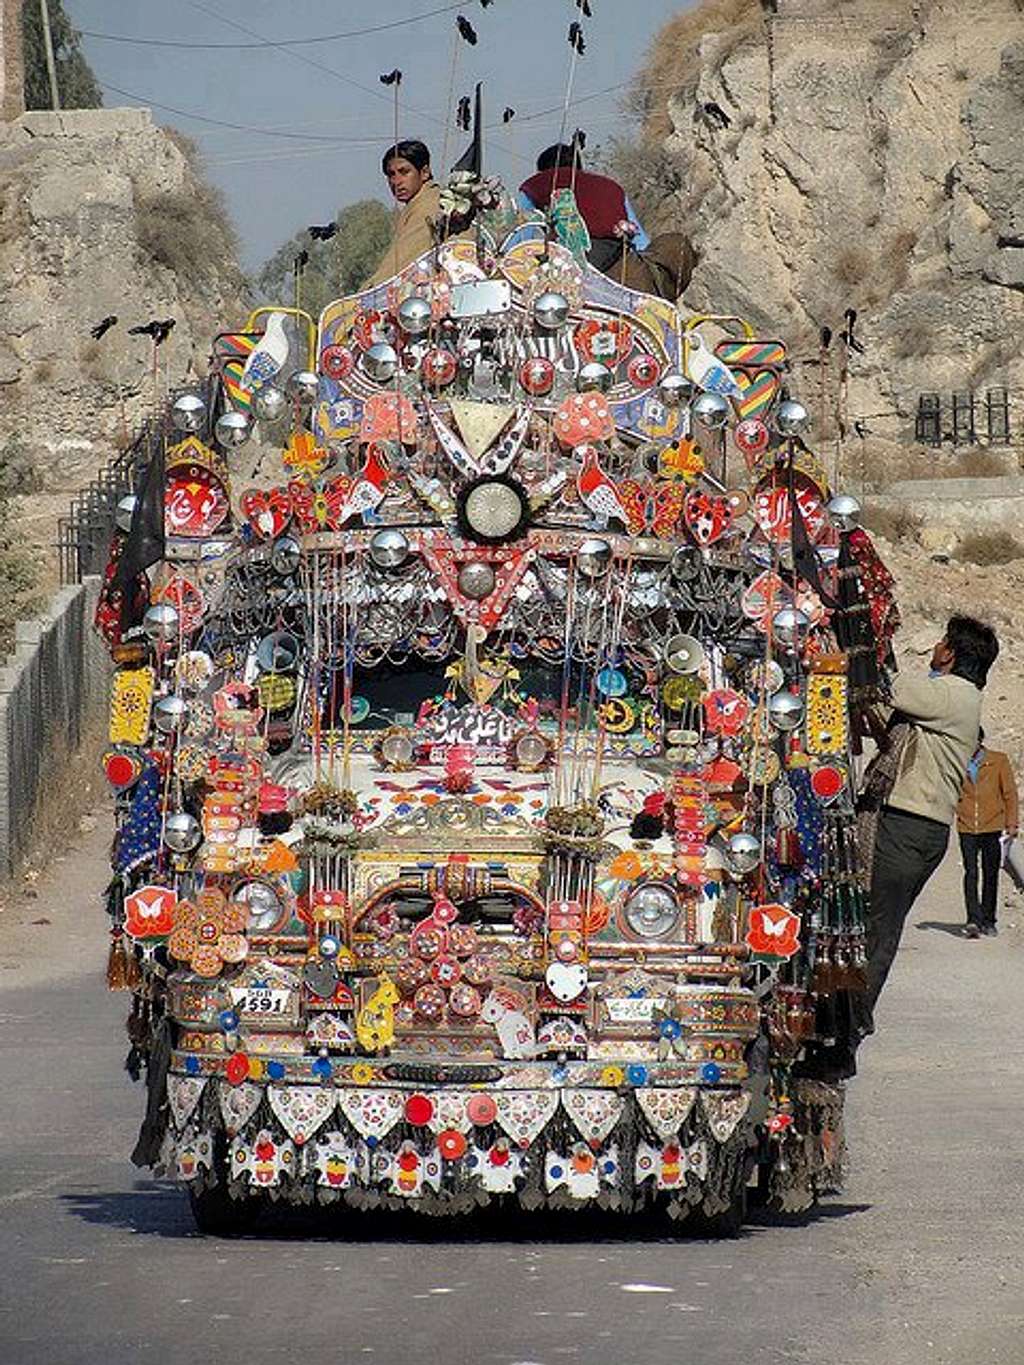 bus decoration in pakistan